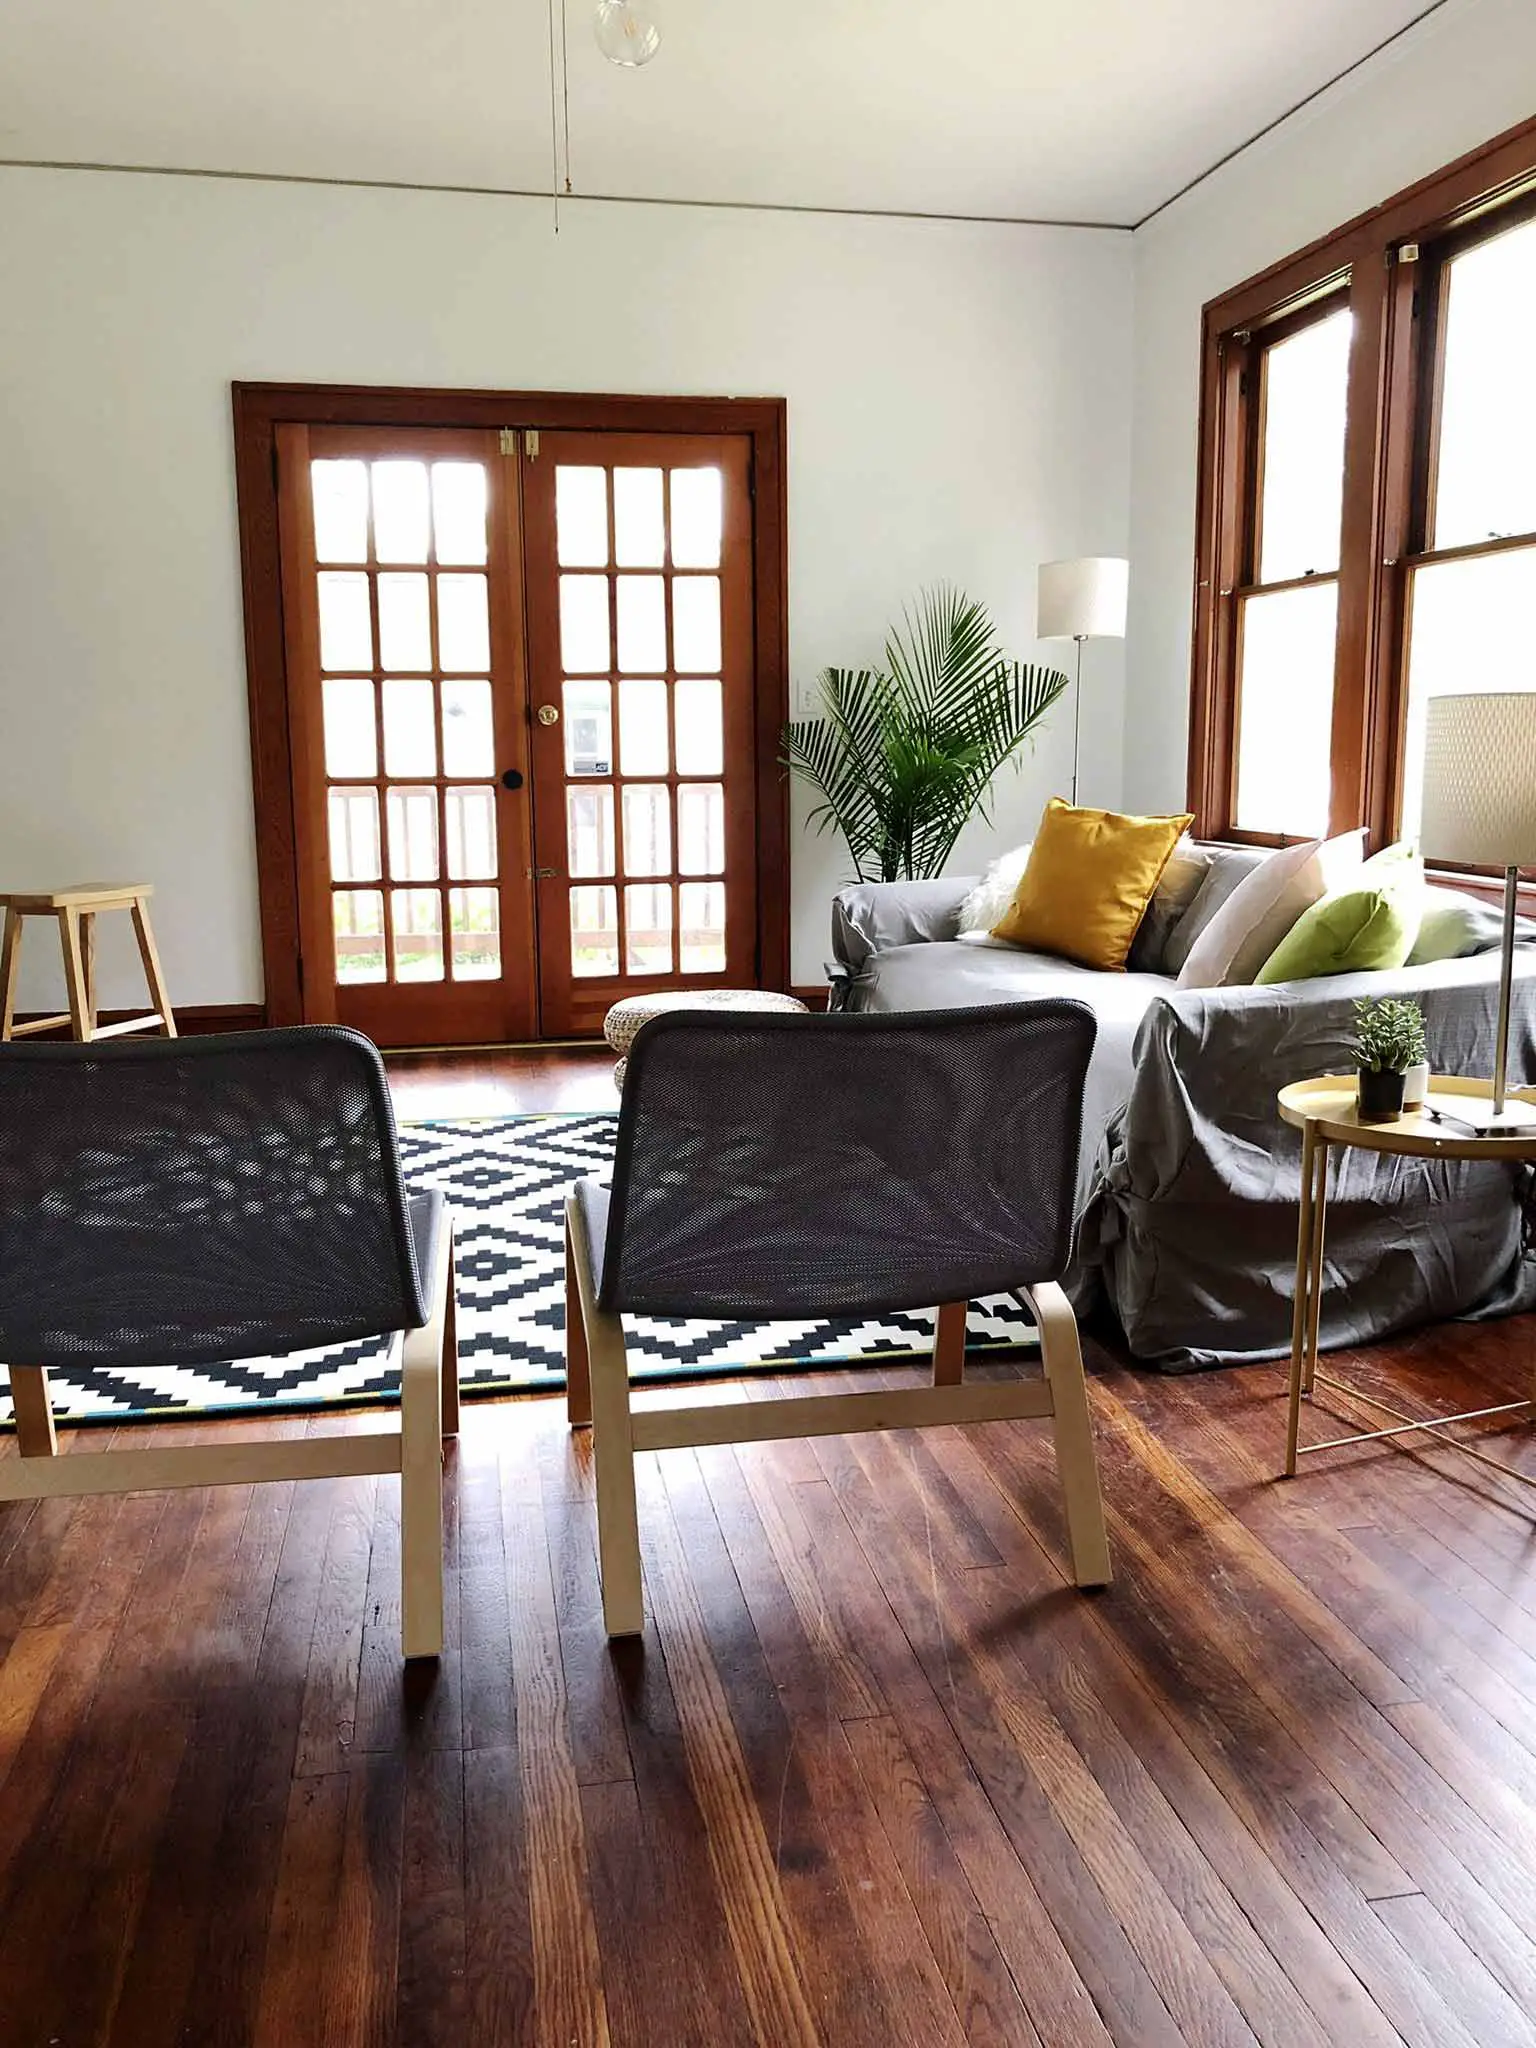 Modern minimalist room makeover on a budget - That Homebird Life Blog